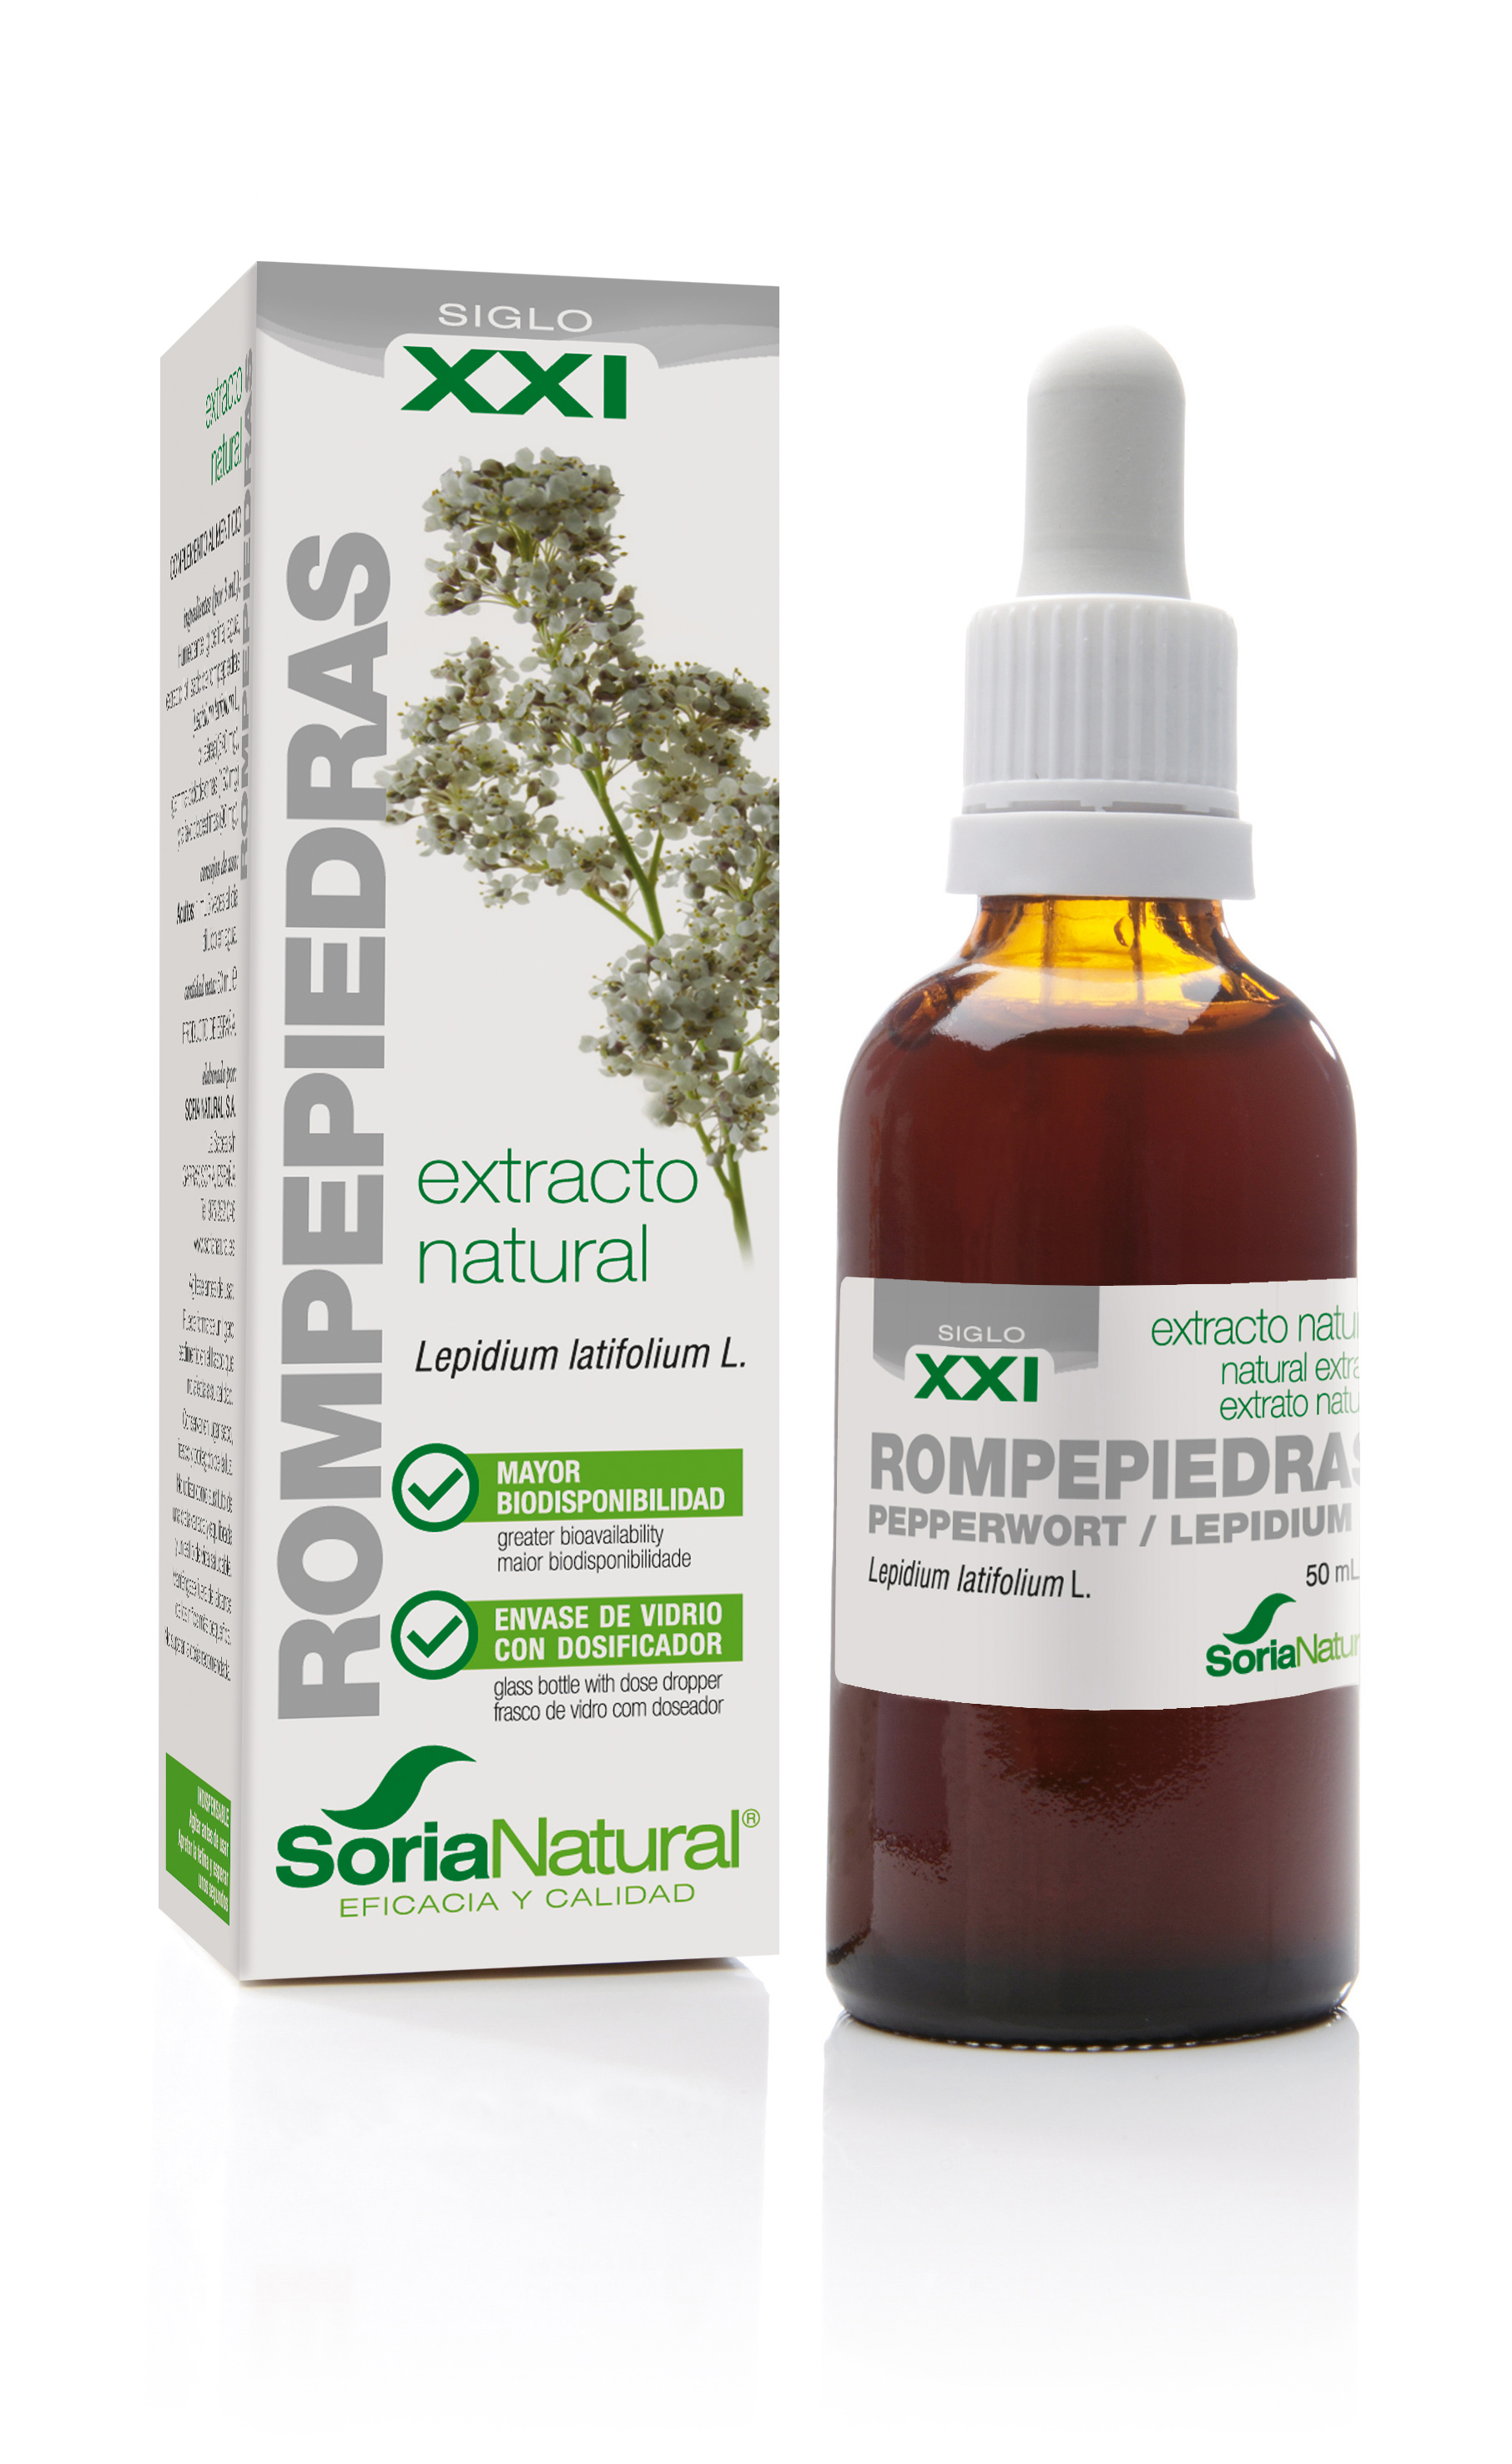 Soria Natural Siglo XXI Extracto natural rompepiedras, 50 ml